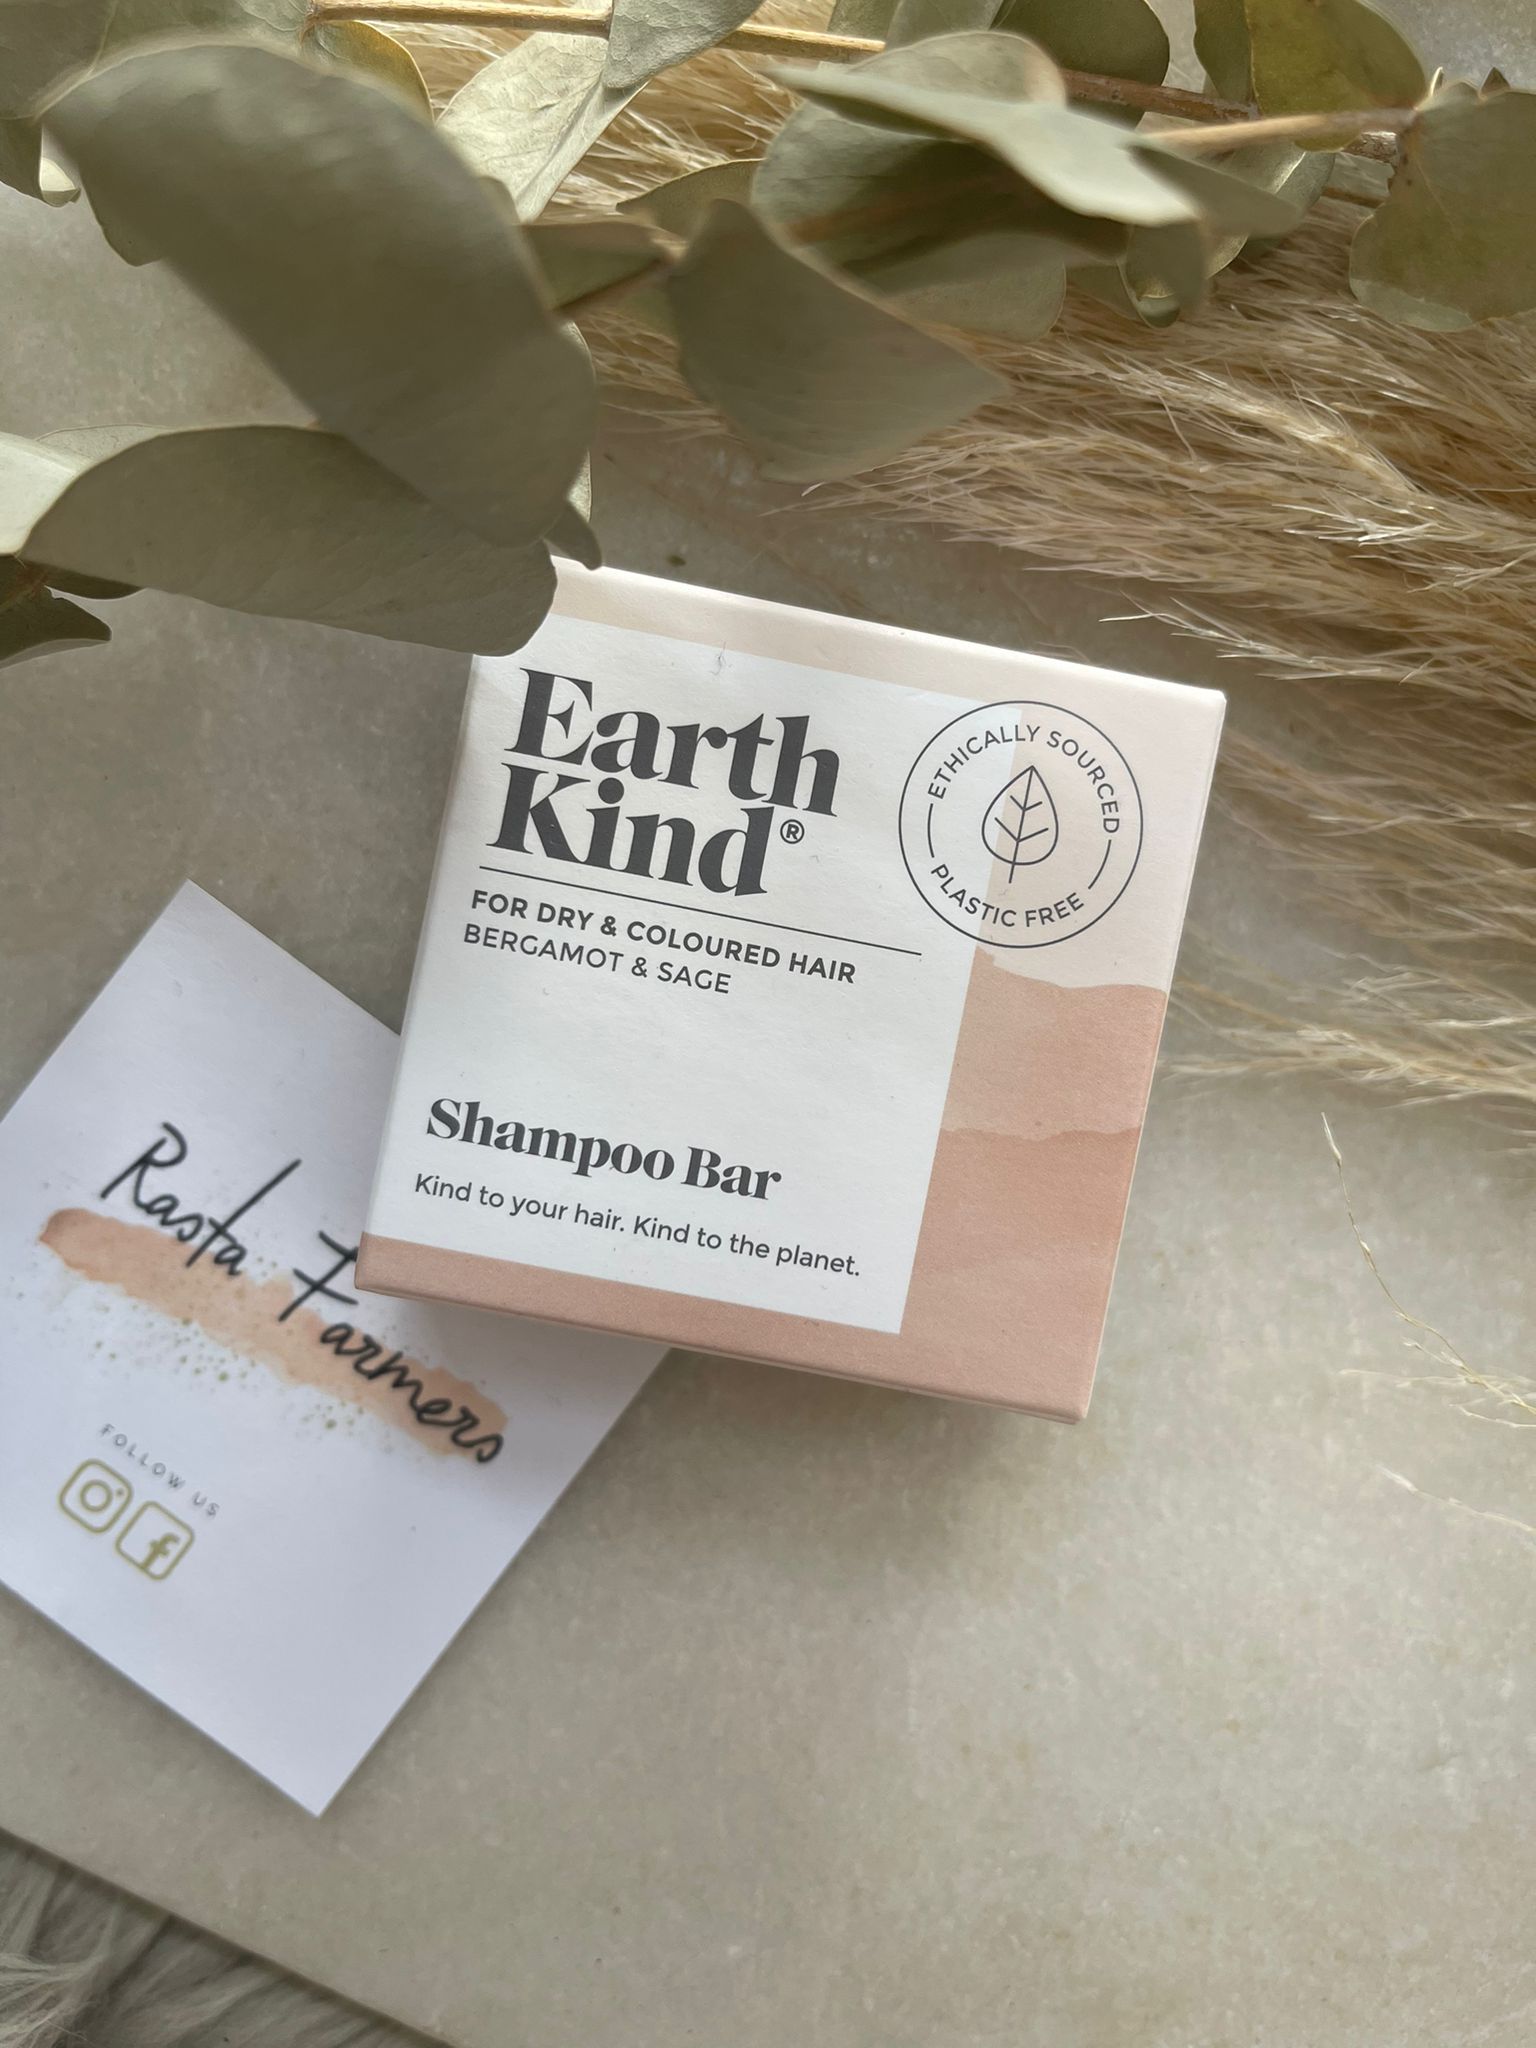 Earth Kind - Bergamot & Sage Shampoo Bar - Dry & Coloured Hair